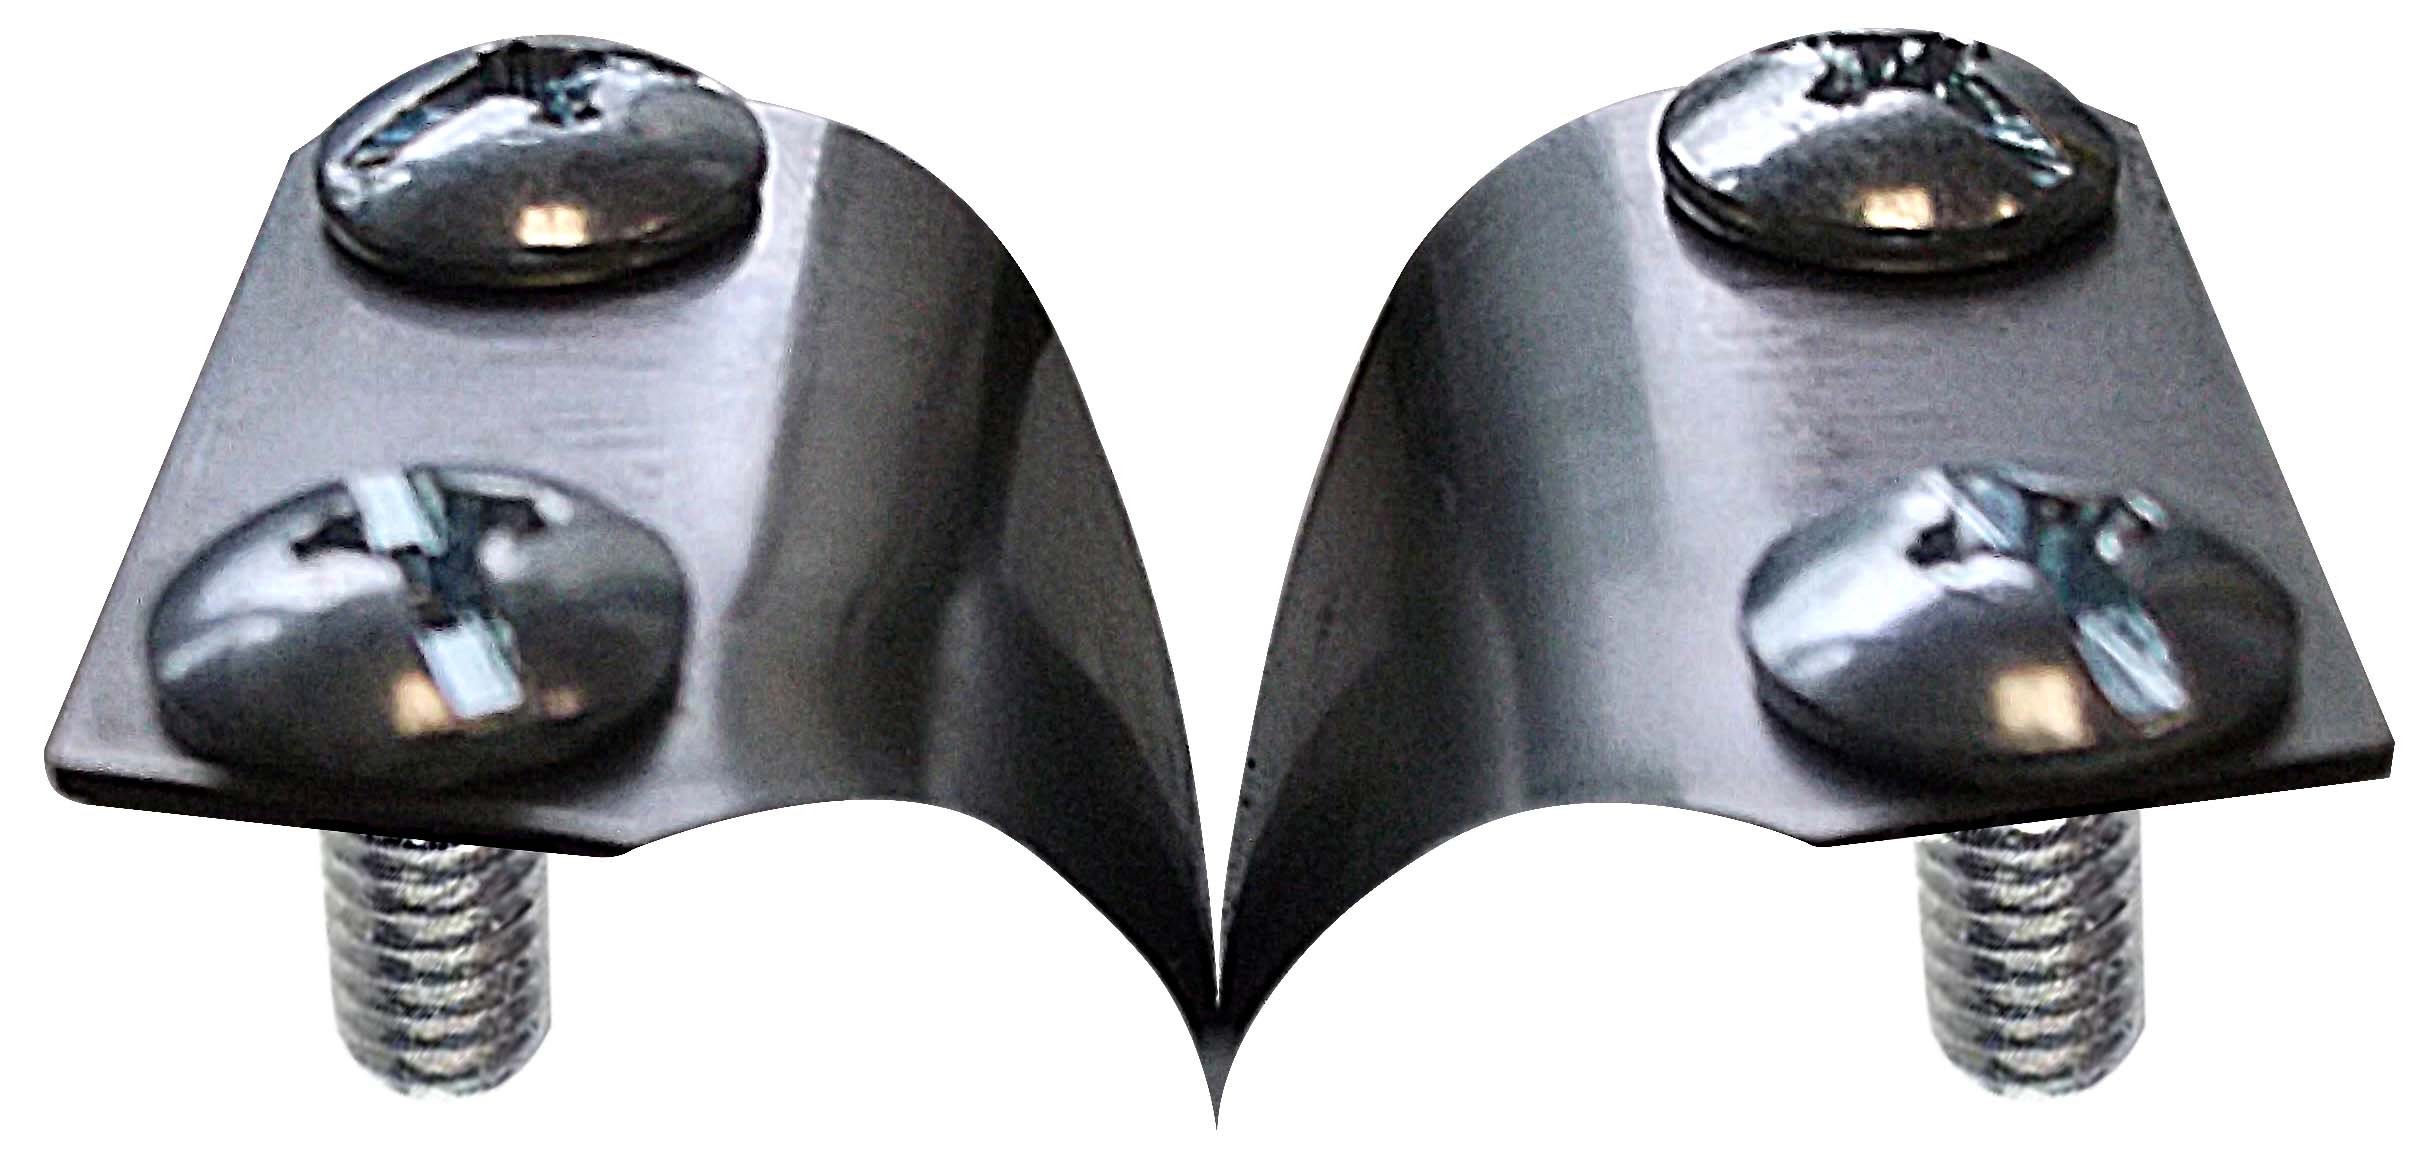 Zenport Cuchilla de herramienta deZJ68-A V Cut-Blade Injerto de reemplazo superior para Injerto Árboles Frutales y Vides